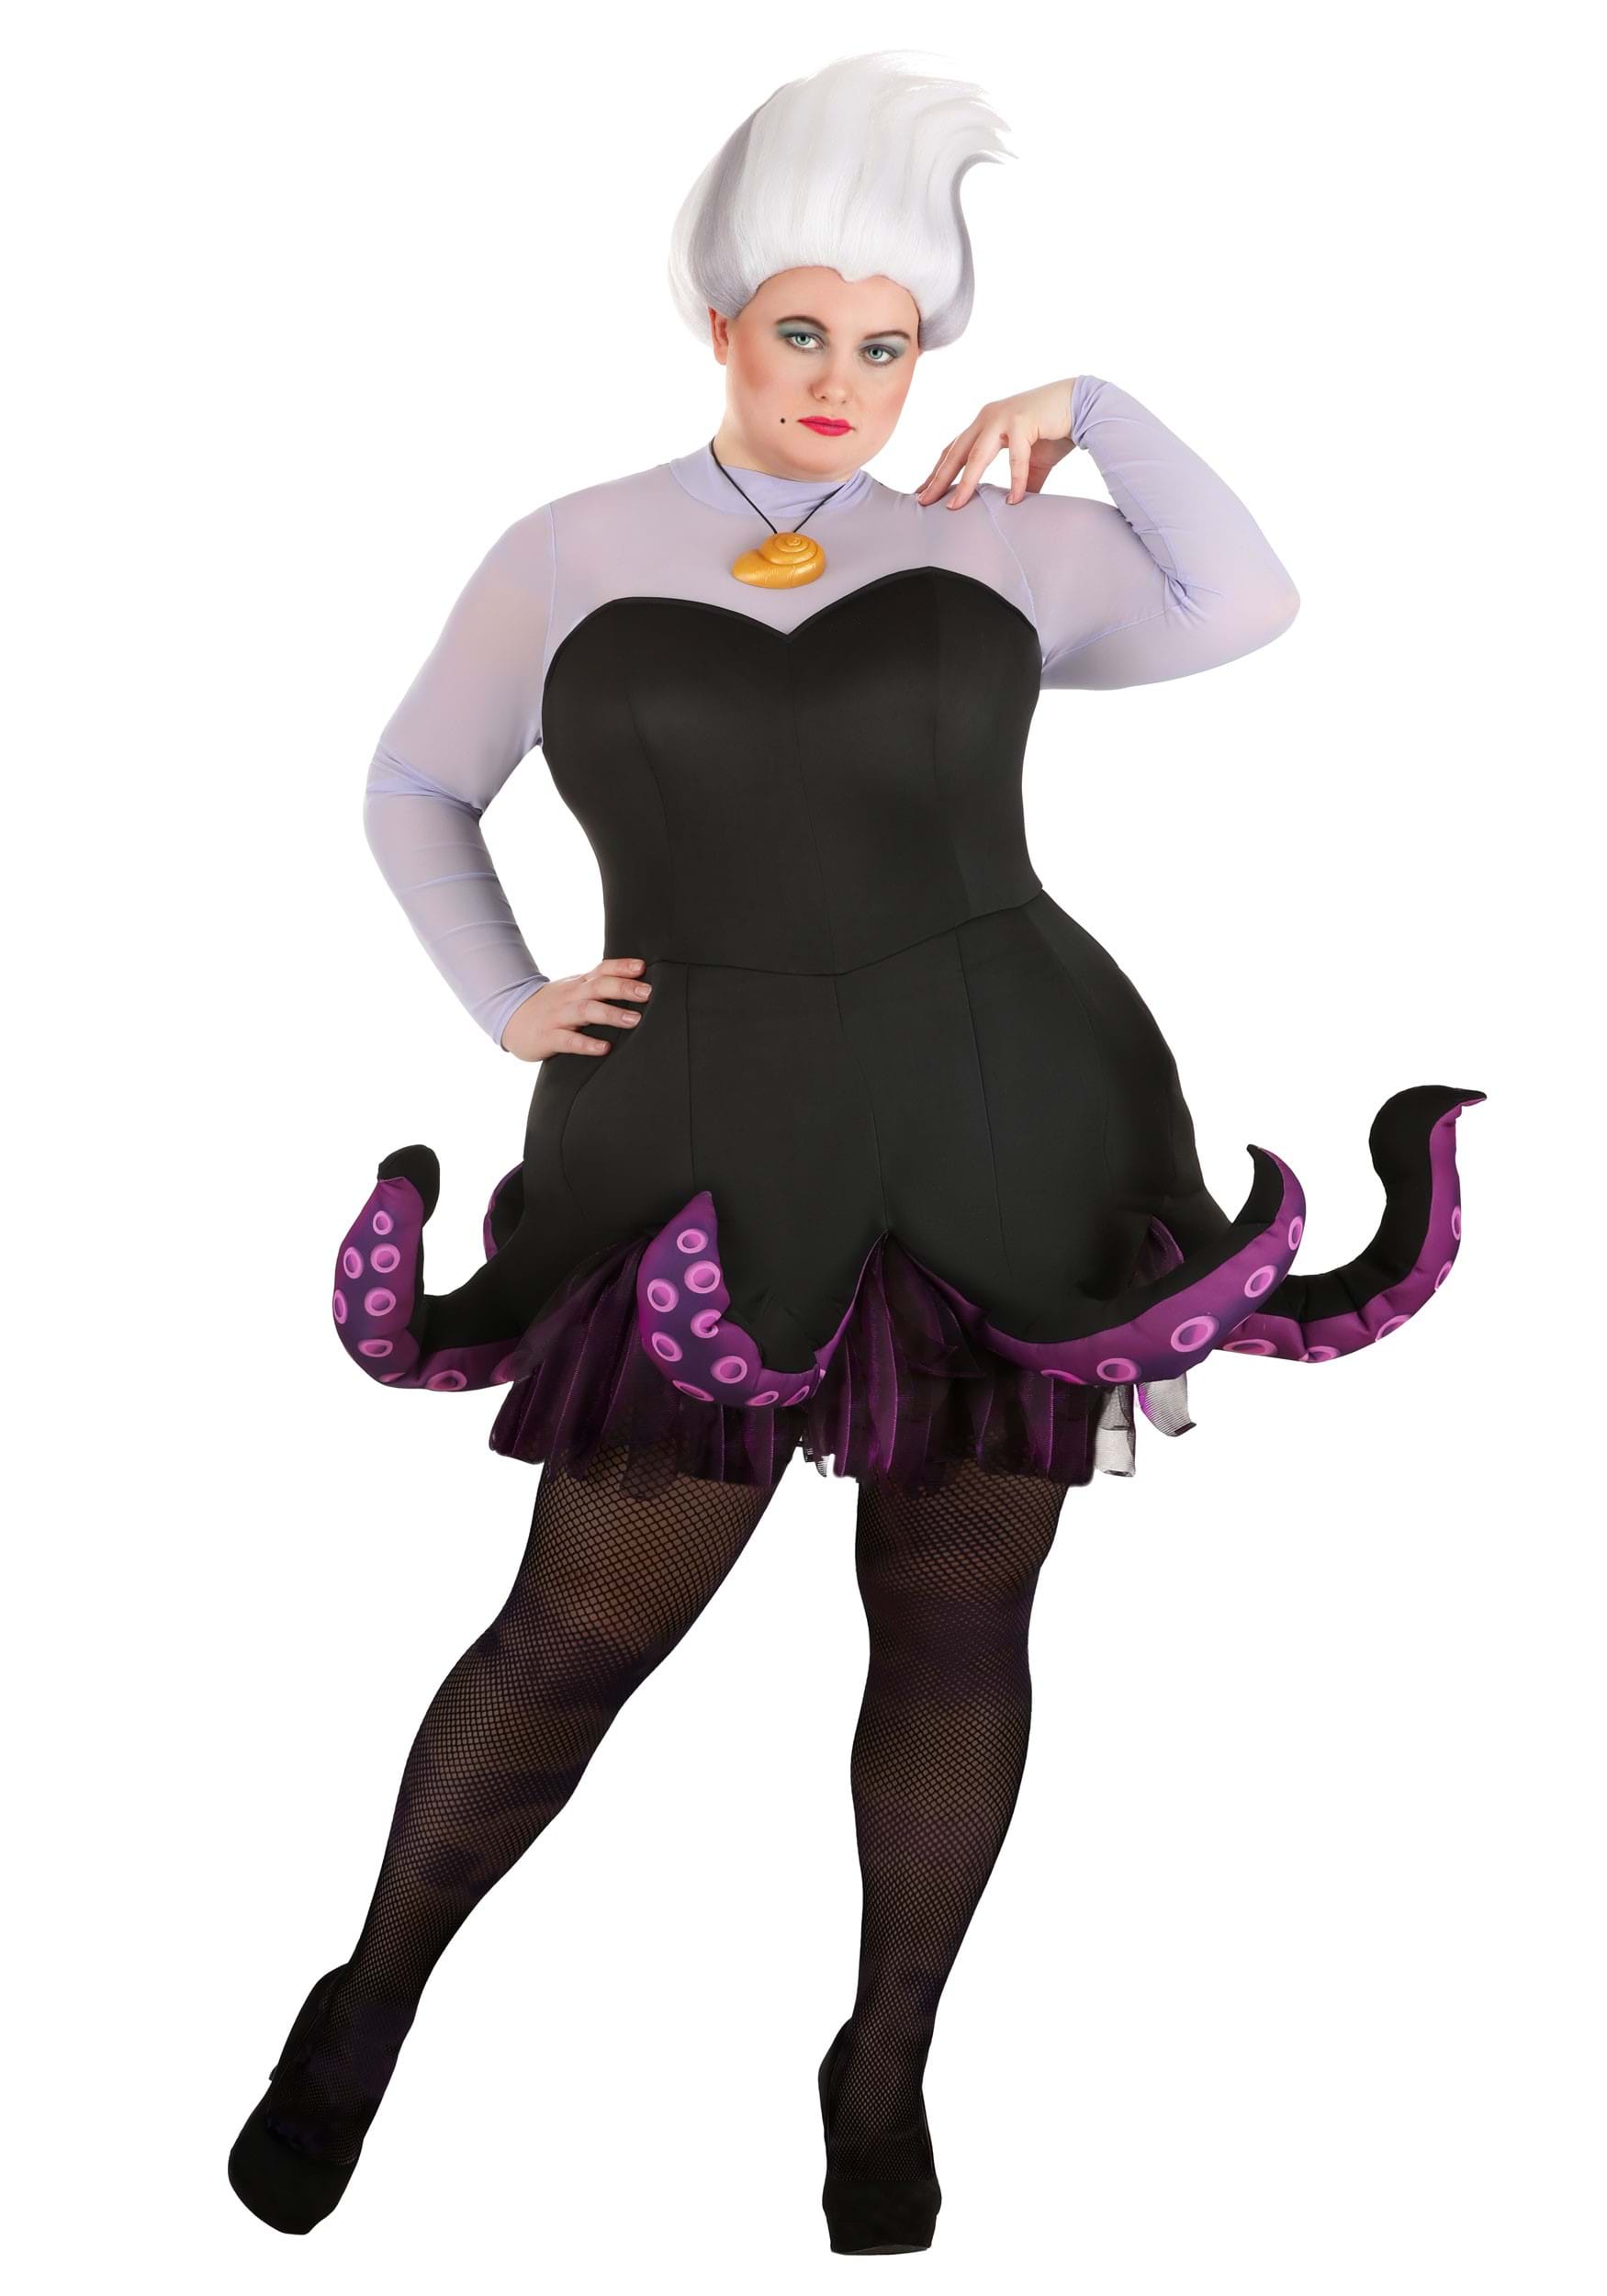 9.) Women's Plus Size Deluxe Disney Ursula Costume